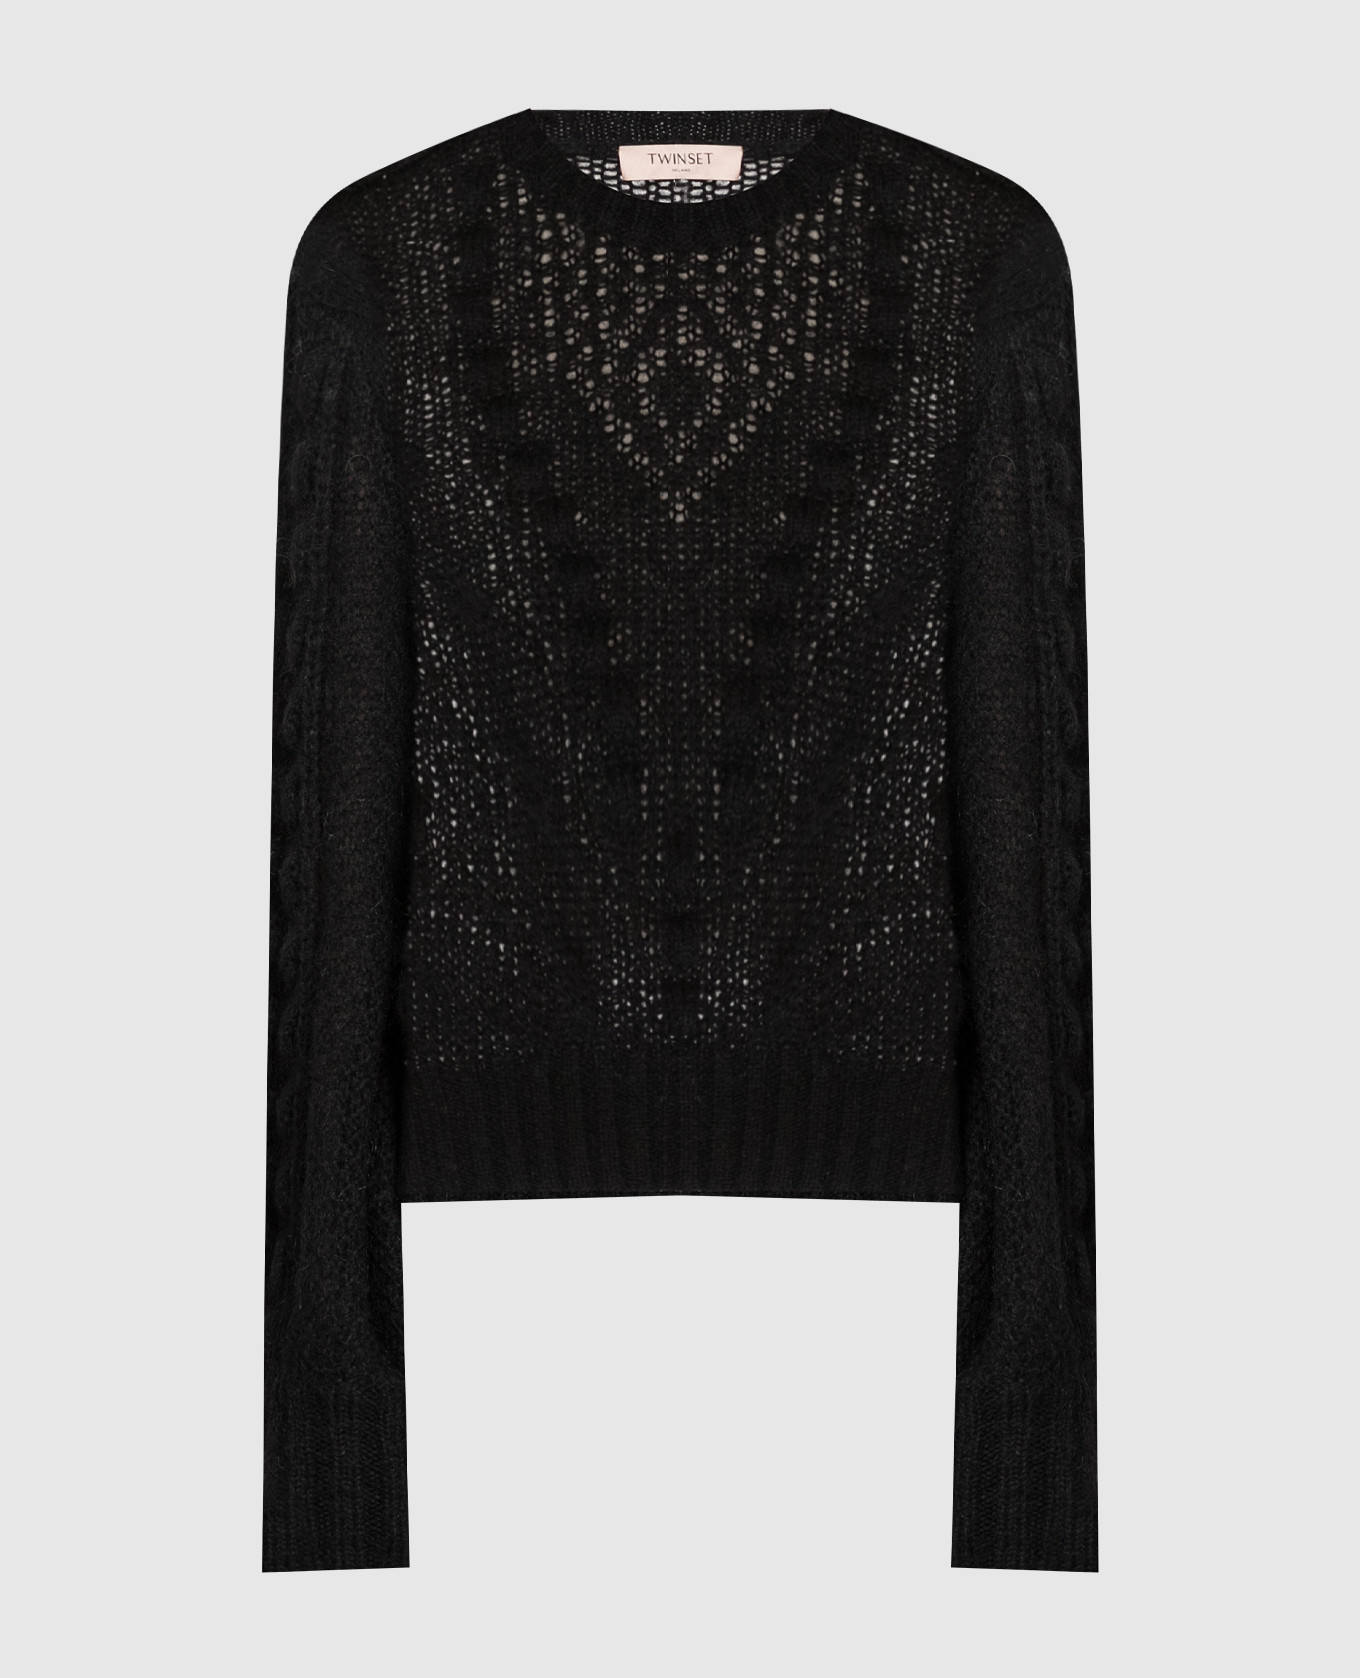 Black openwork sweater in a pattern